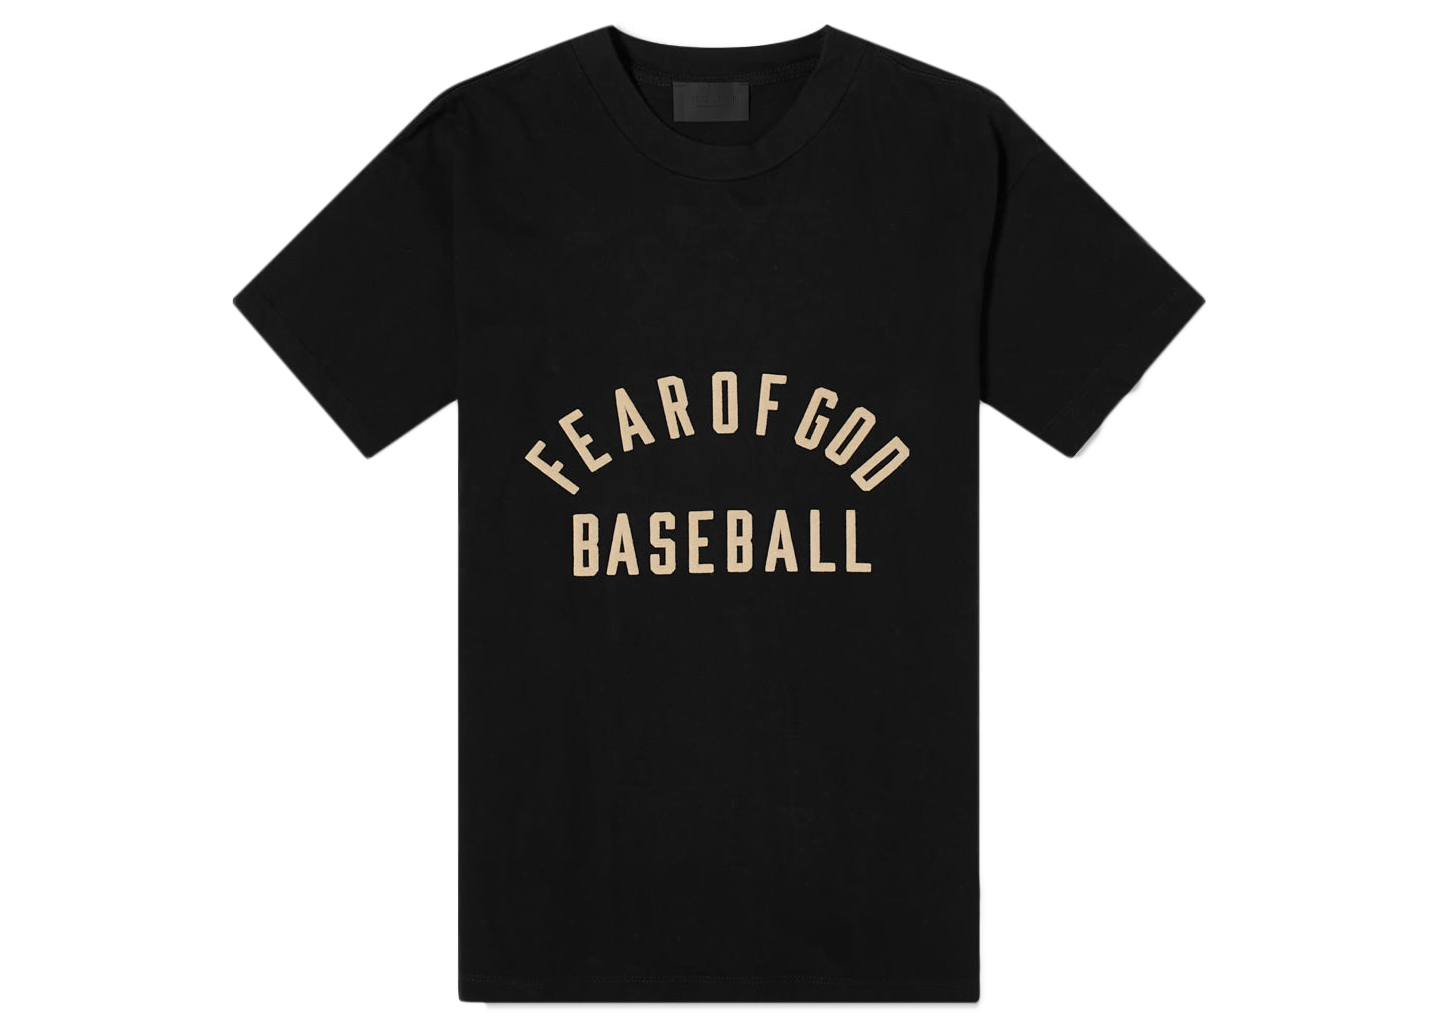 Fear of God Baseball T-shirt Black Men's - SEVENTH COLLECTION - US